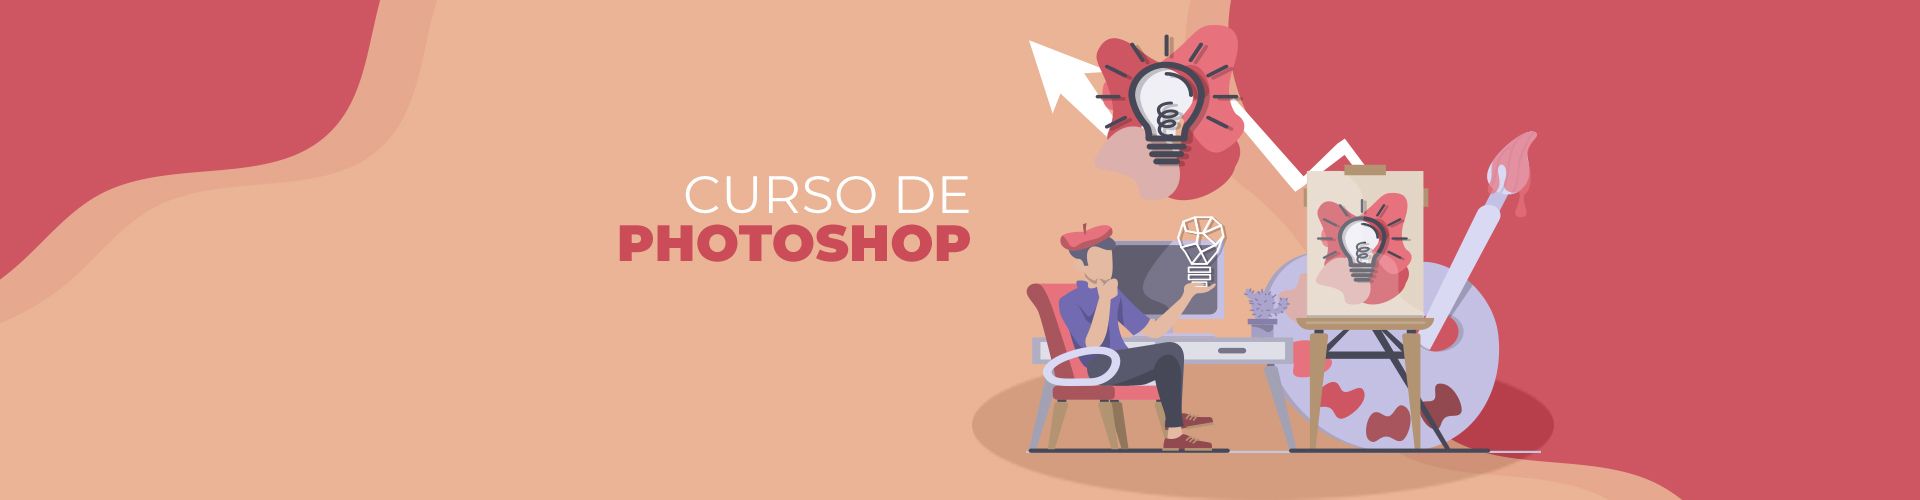 Curso de Photoshop - Escola Cursos Maringá